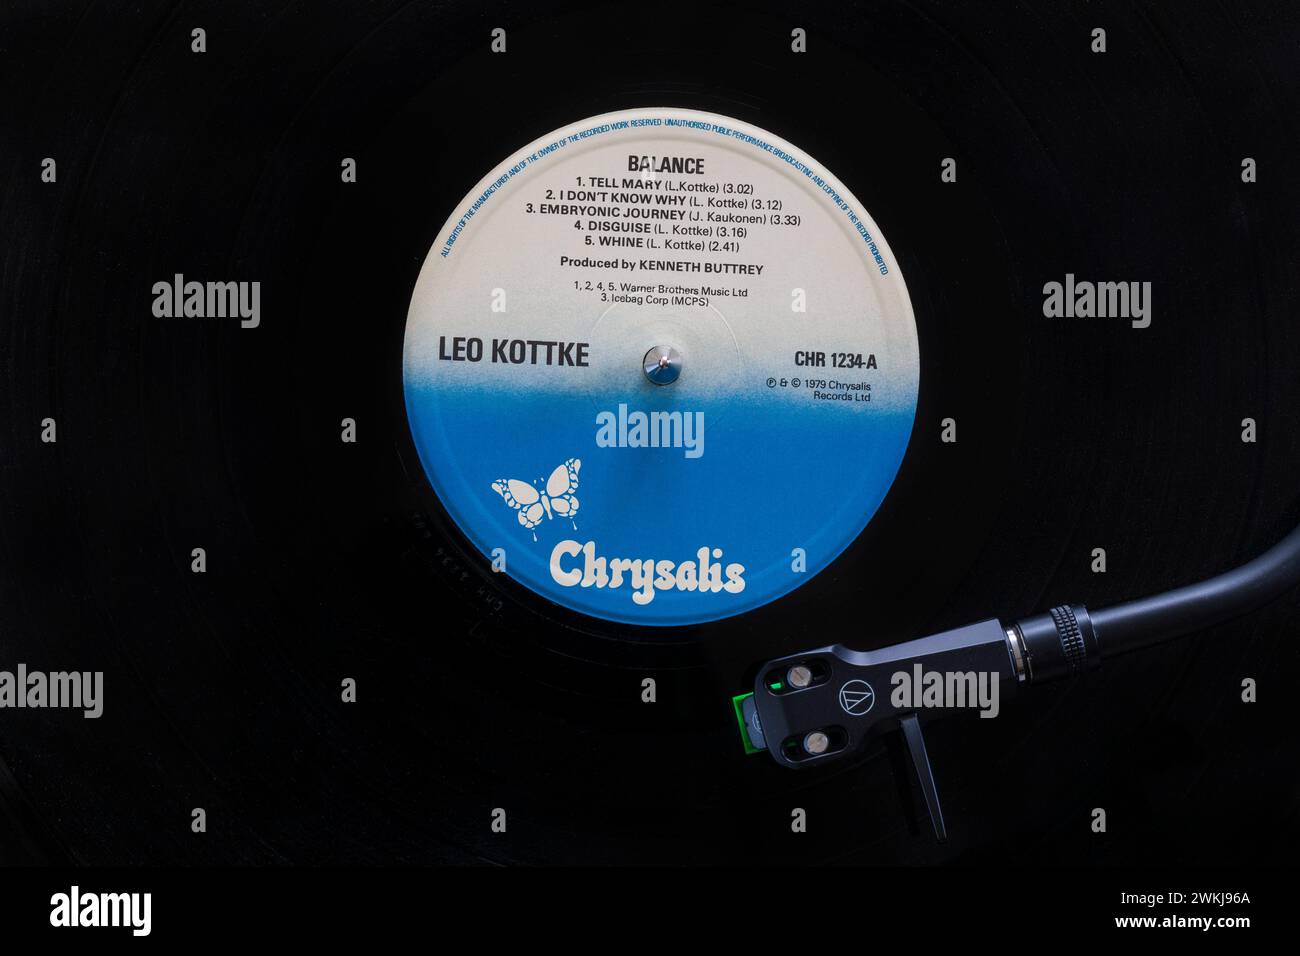 Leo Kottke Balance vinyl record album LP with tonearm, cartridge, headshell and stylus on turntable record player - 1979 Stock Photo